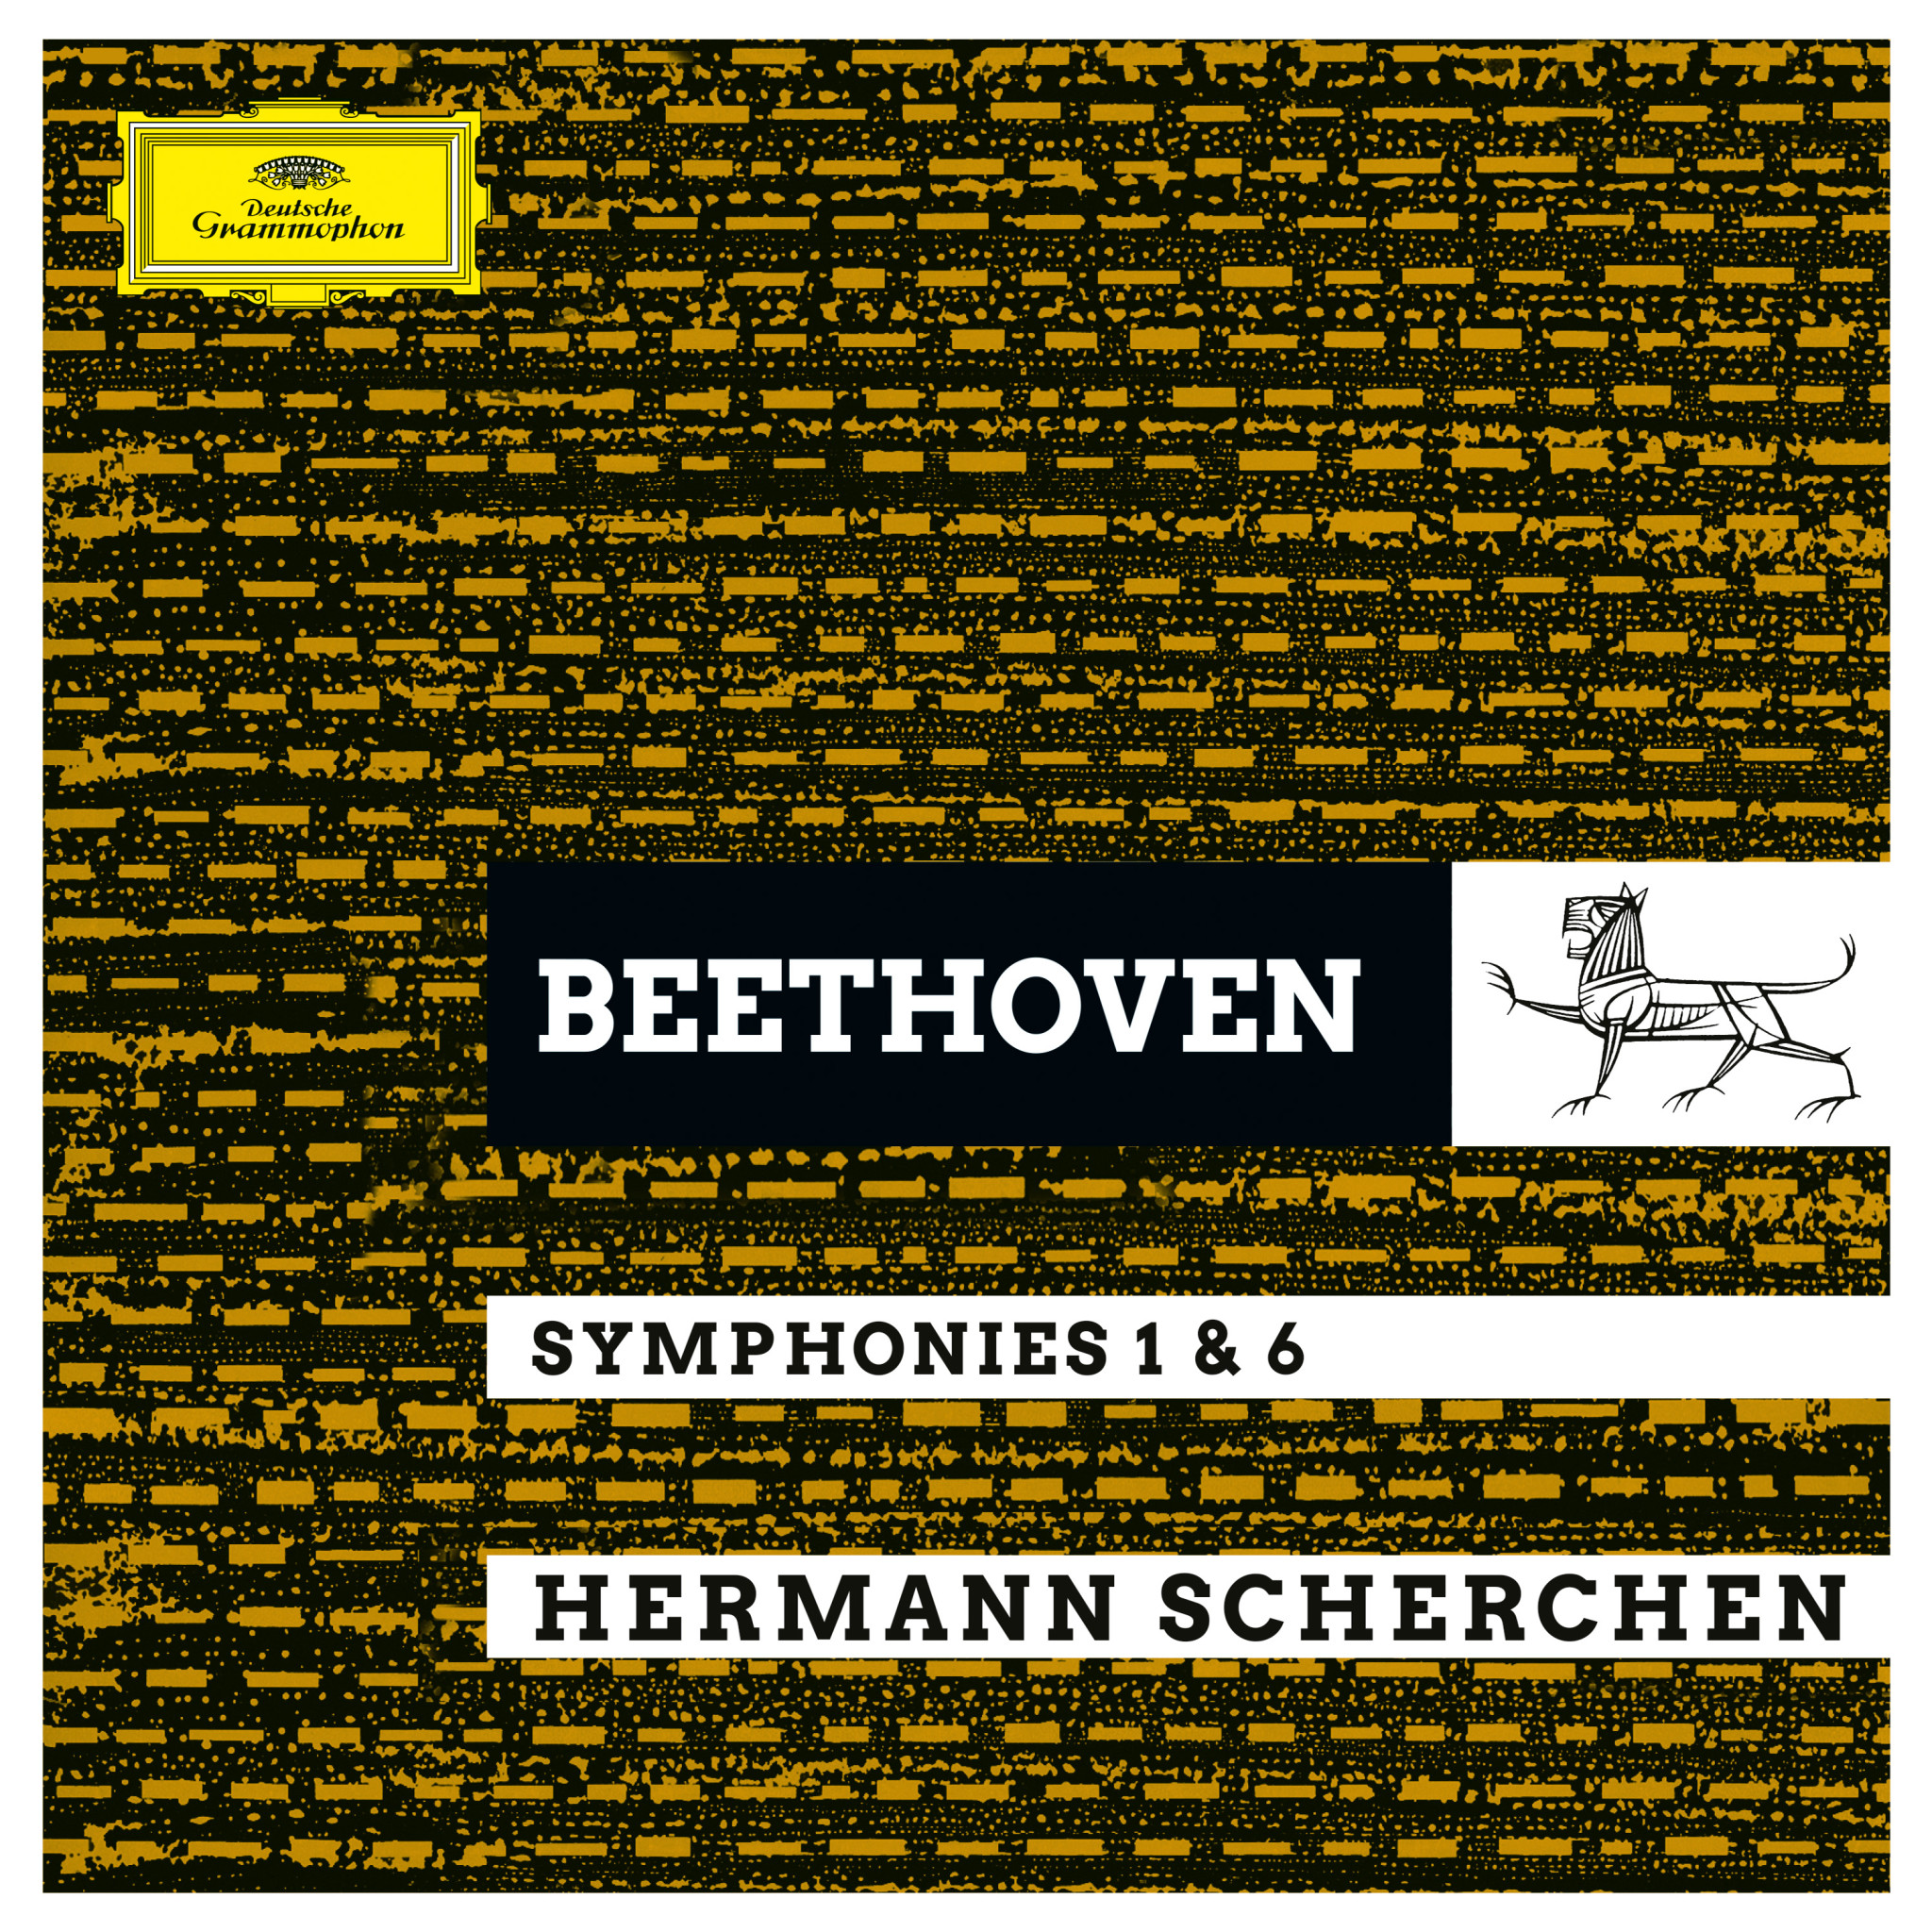 Beethoven: Symphonies 1 & 6 Hermann Scherchen